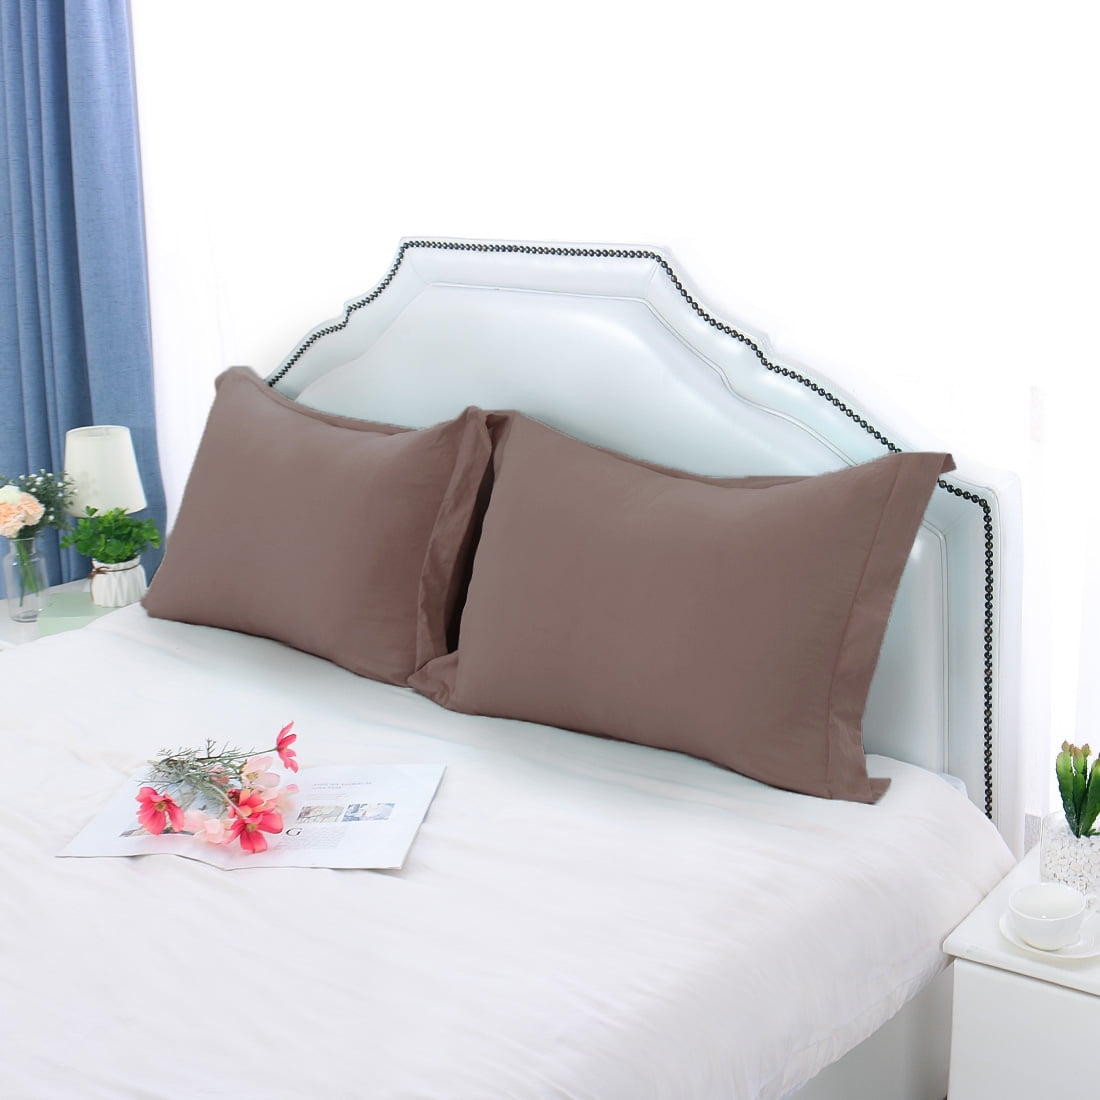 Housine Pom-Fringe Cotton Pillow Covers 18.9in x 29.1in White Set of 2 Tassel Sham Set Cotton Pillowcase Queen Size